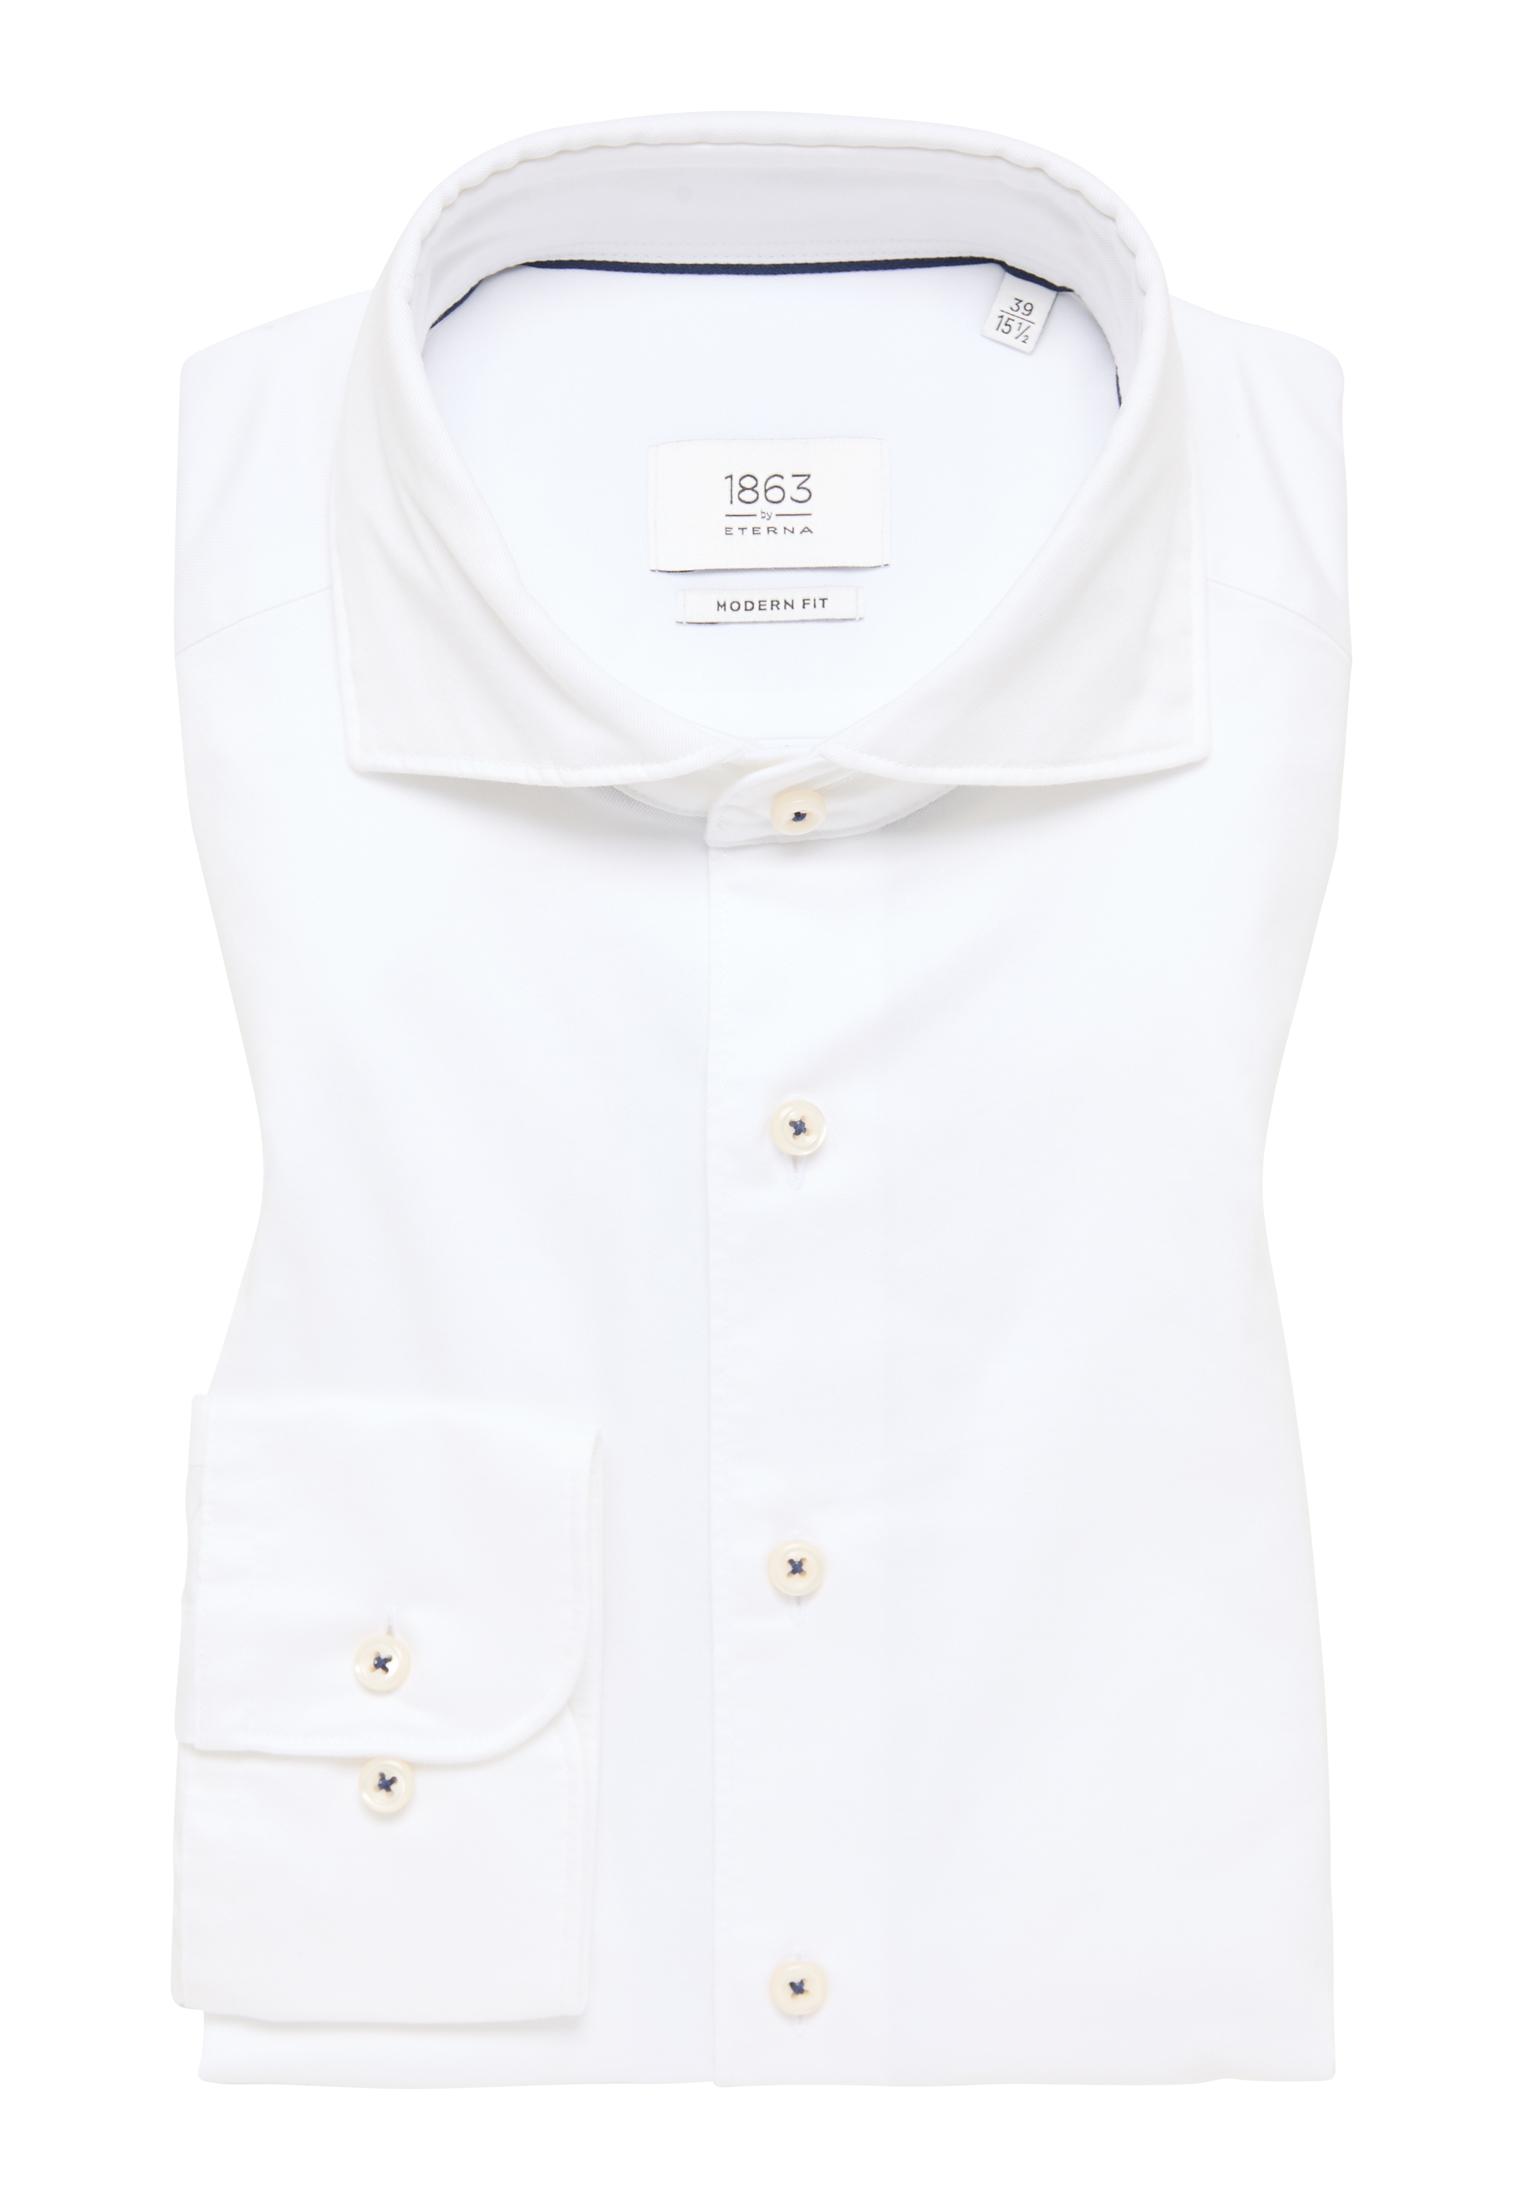 unifarben | MODERN | FIT 43 in | off-white Luxury 1SH03488-00-02-43-1/1 Soft Langarm off-white Shirt |